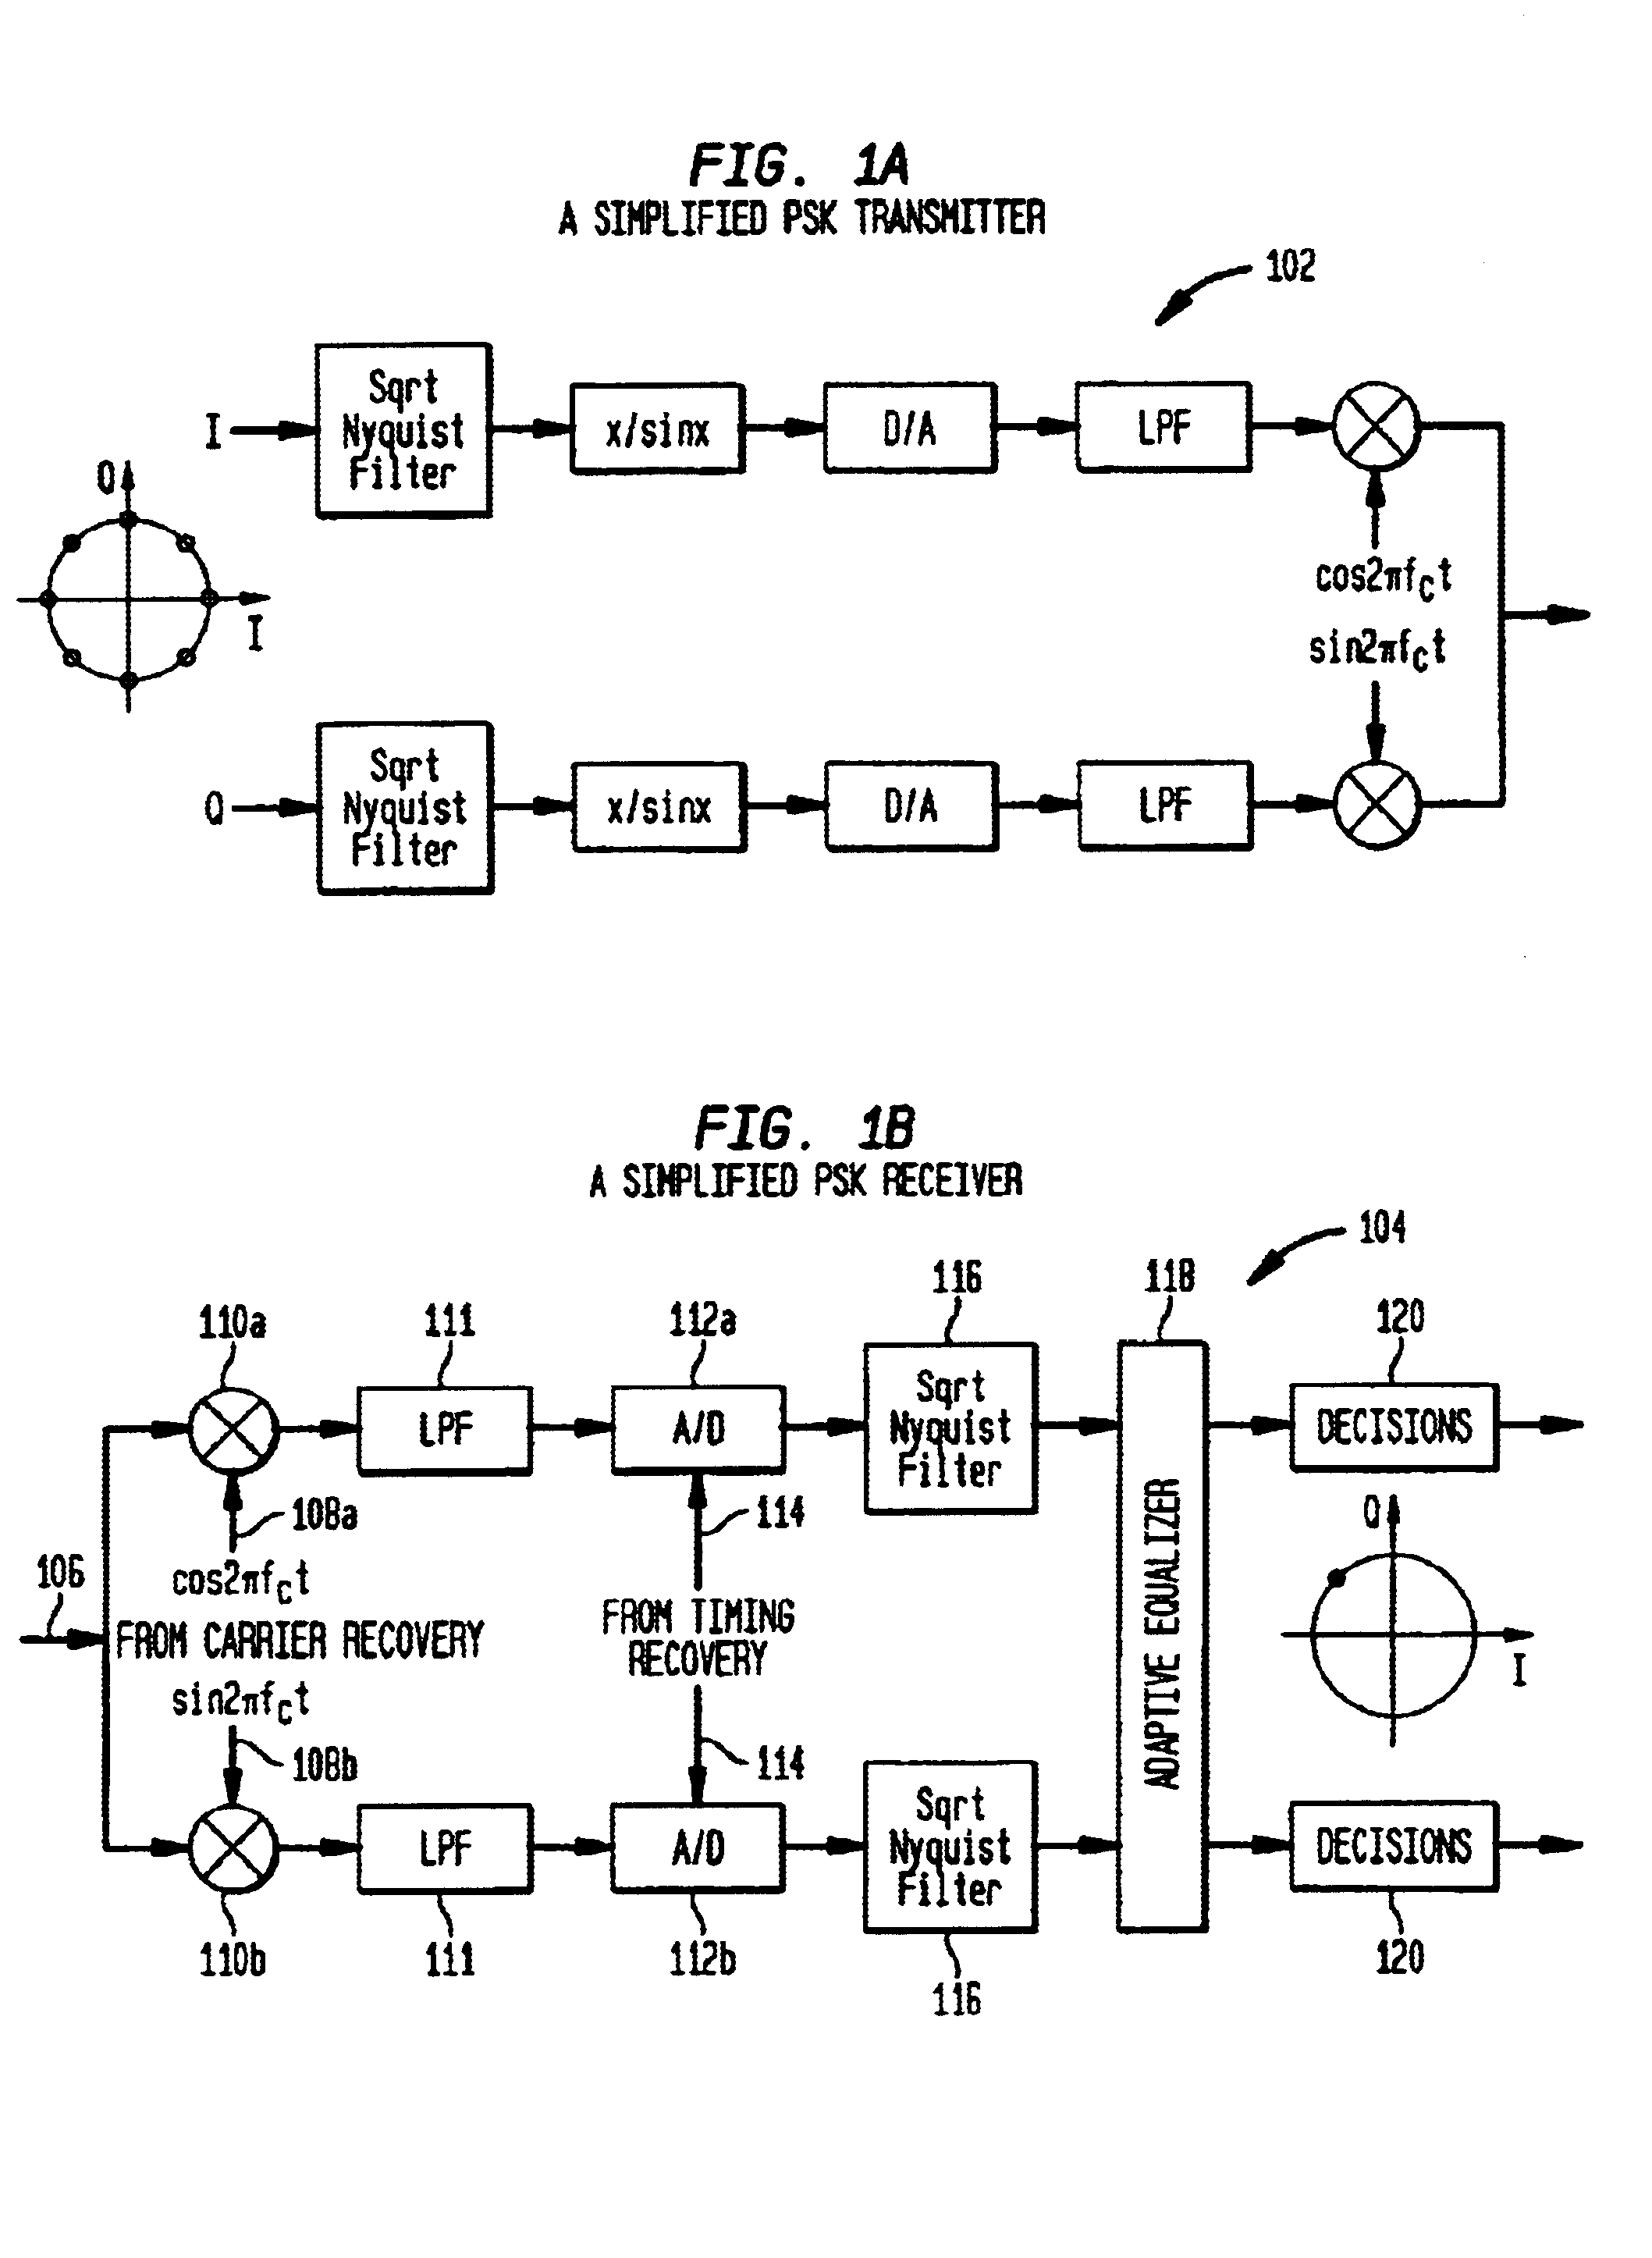 Apparatus and method for rectangular-to-polar conversion